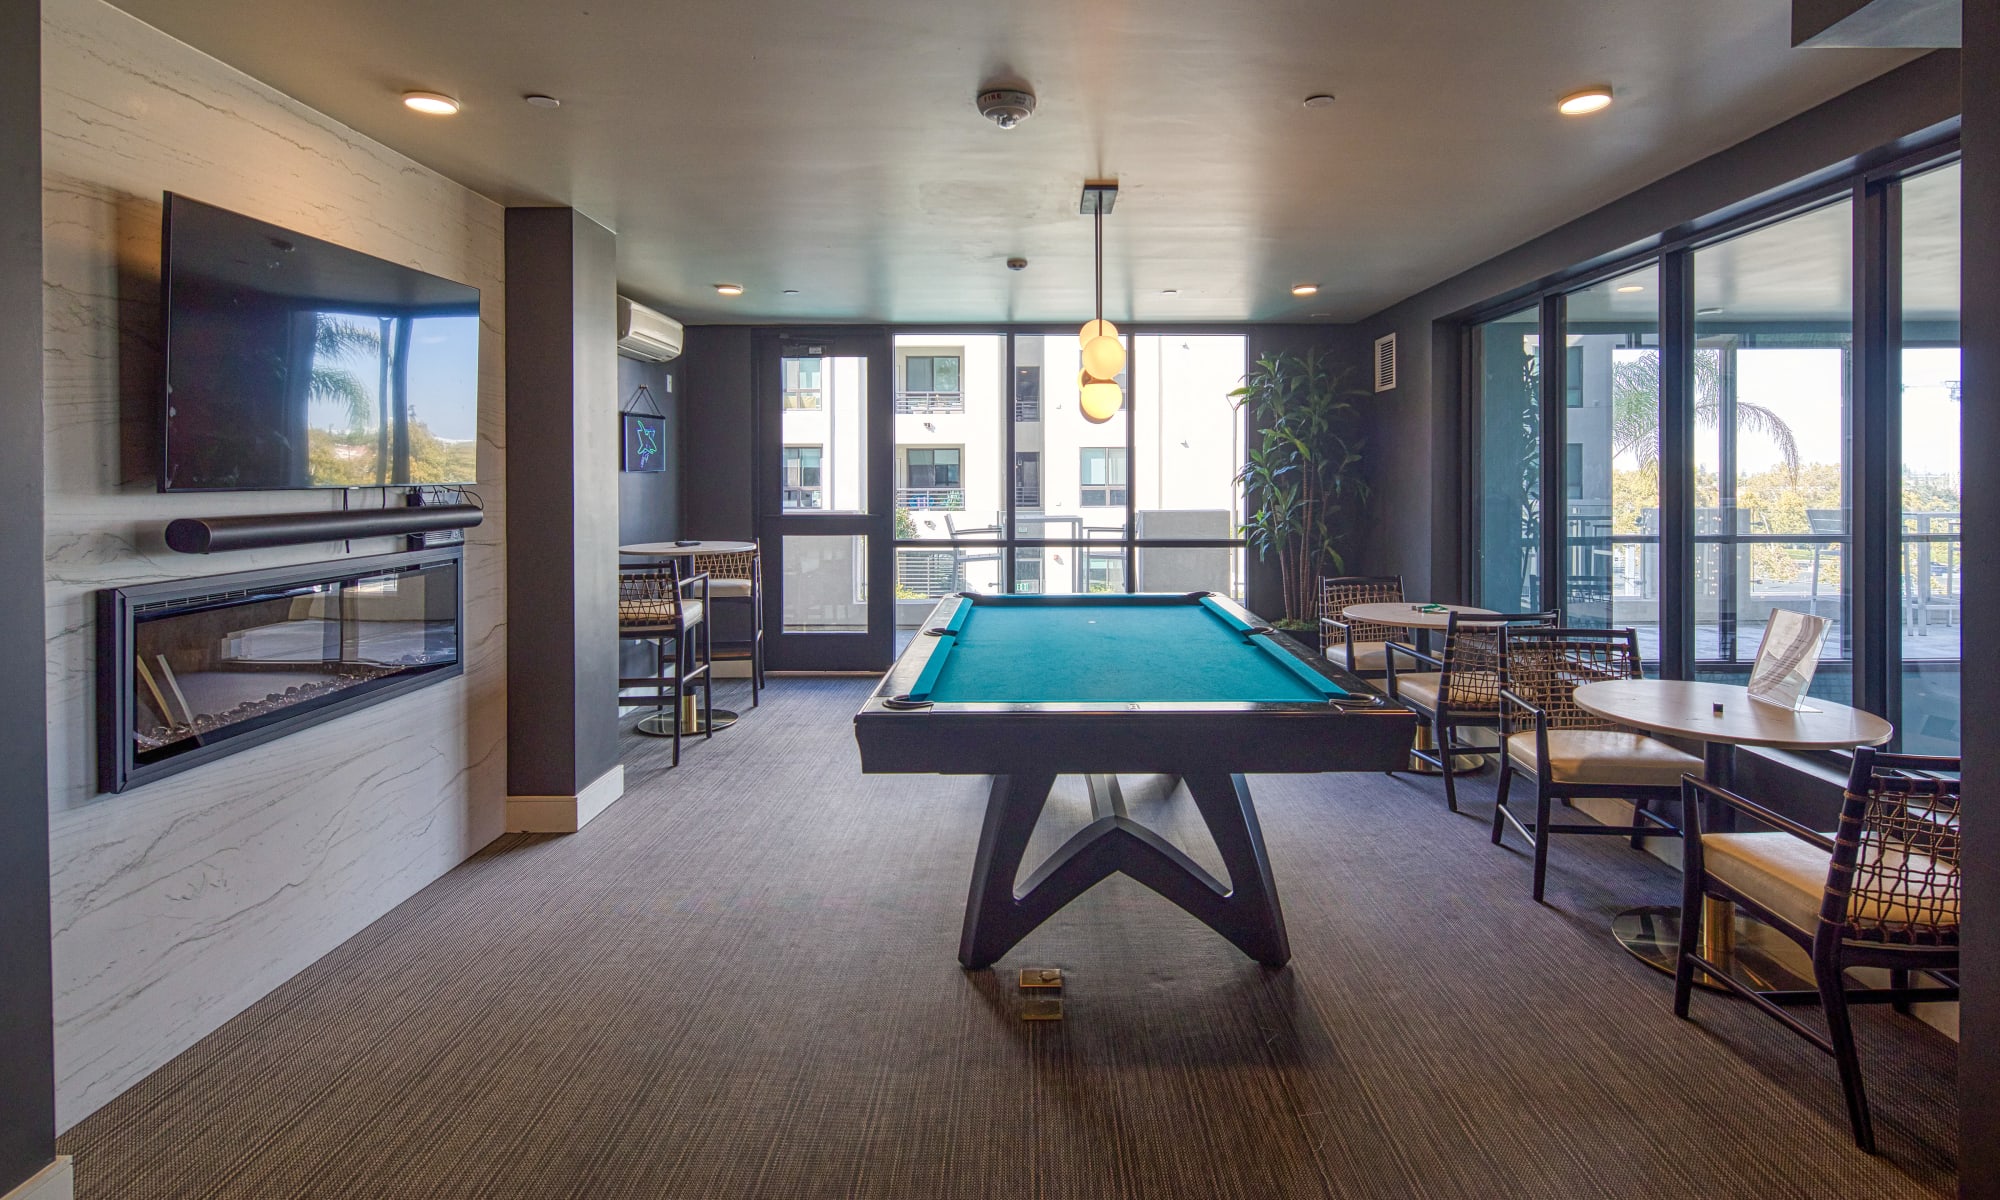 Billiards table in game room at Vespaio in San Jose, California